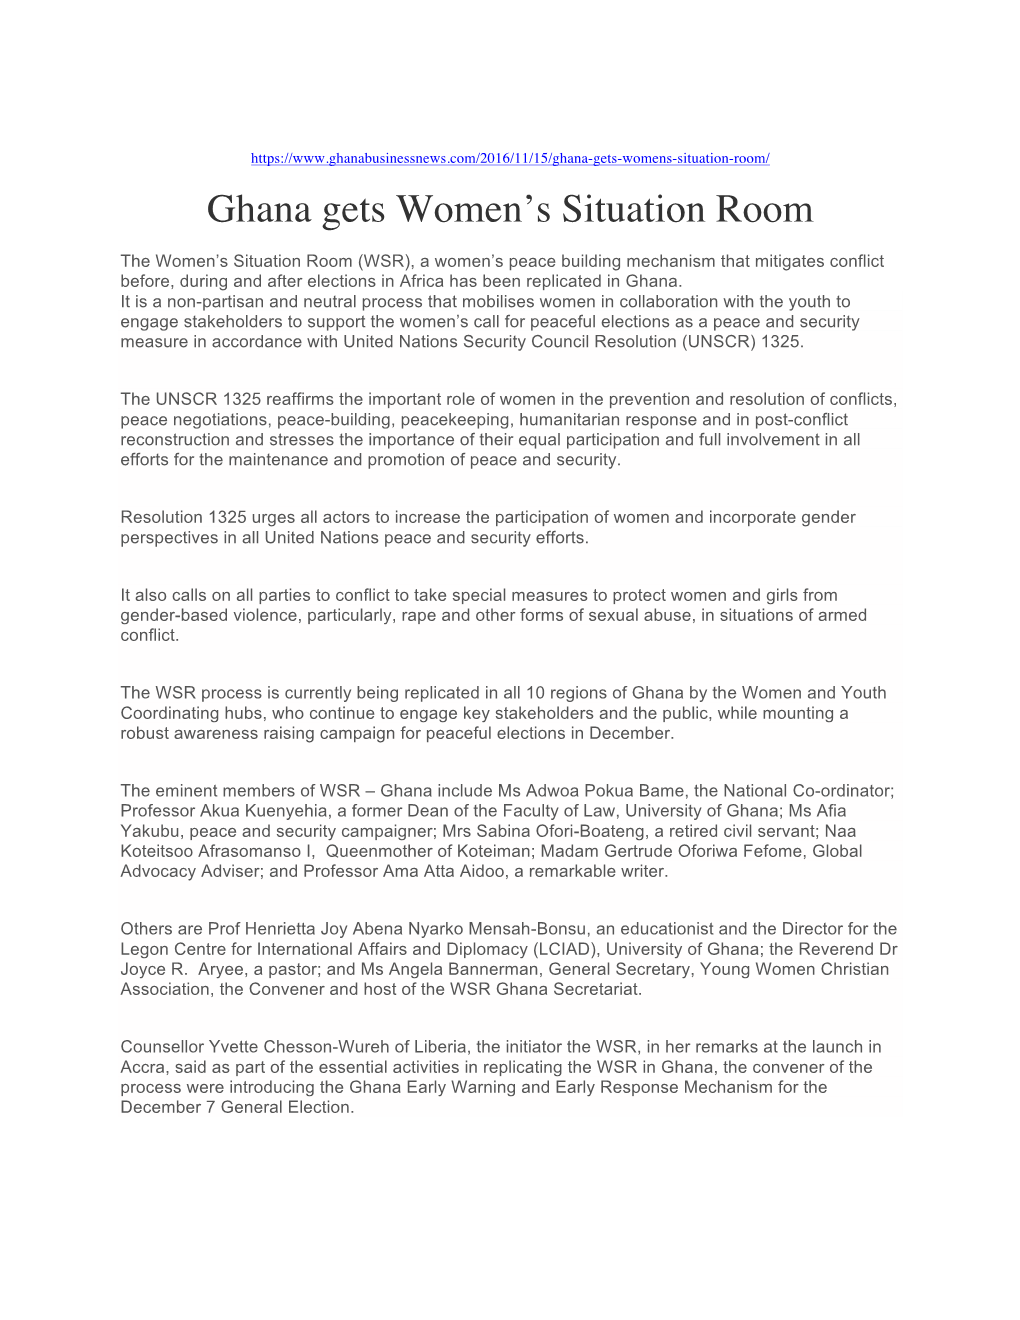 Ghana Gets Women's Situation Room